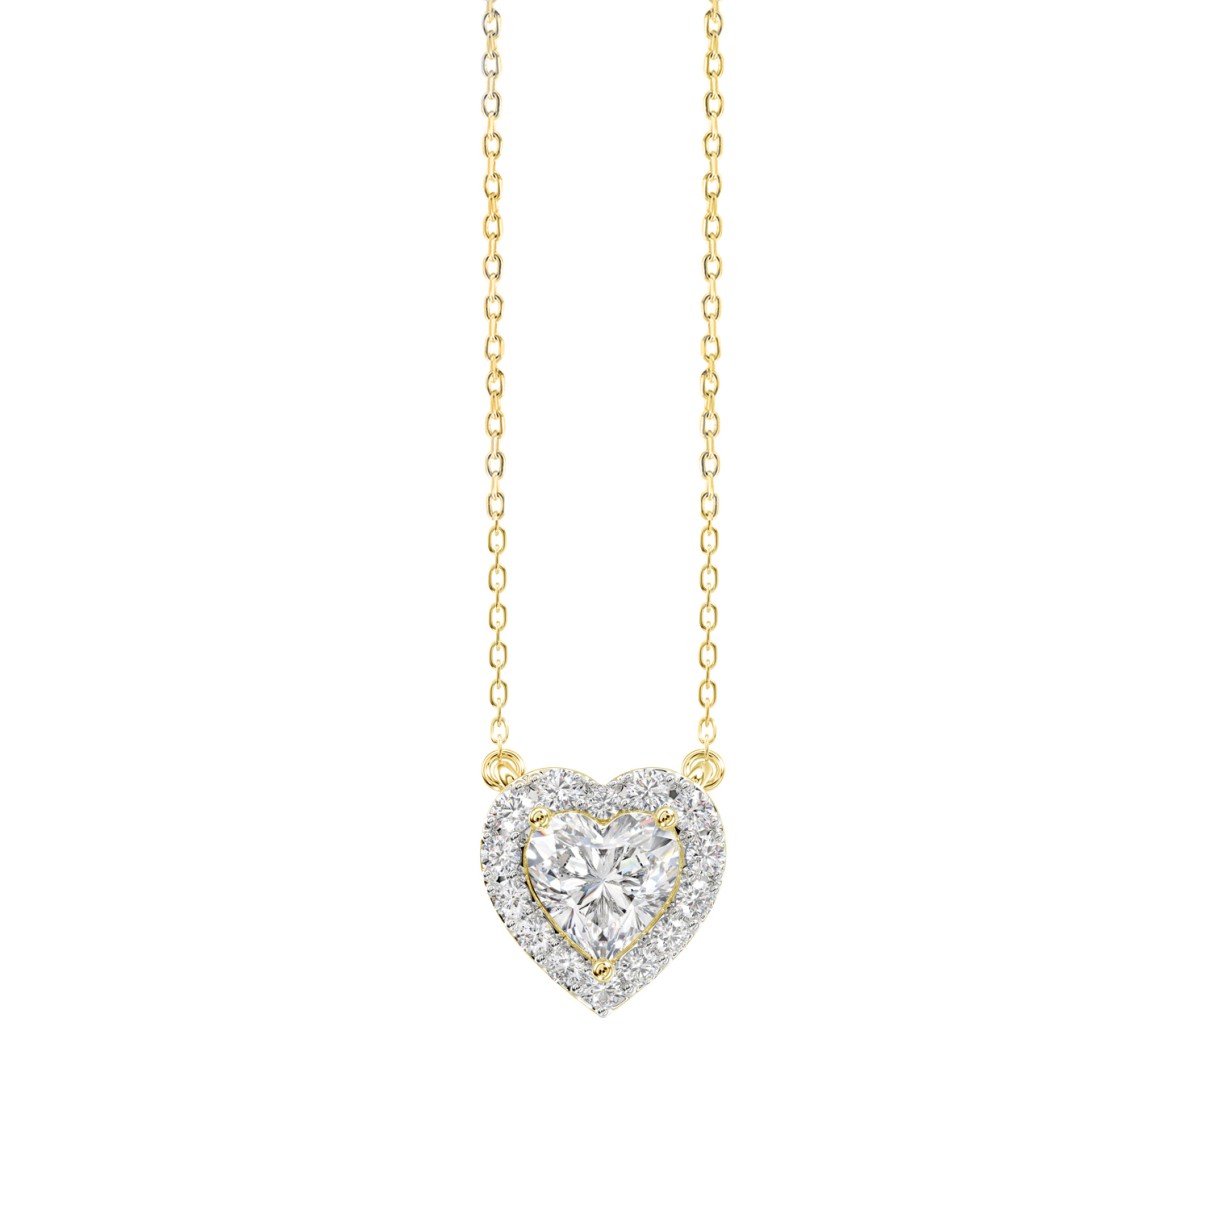 LADIES NECKLACE 1 1/4CT ROUND DIAMOND 14K YELLOW GOLD (CENTER STONE HEART DIAMOND 1CT)